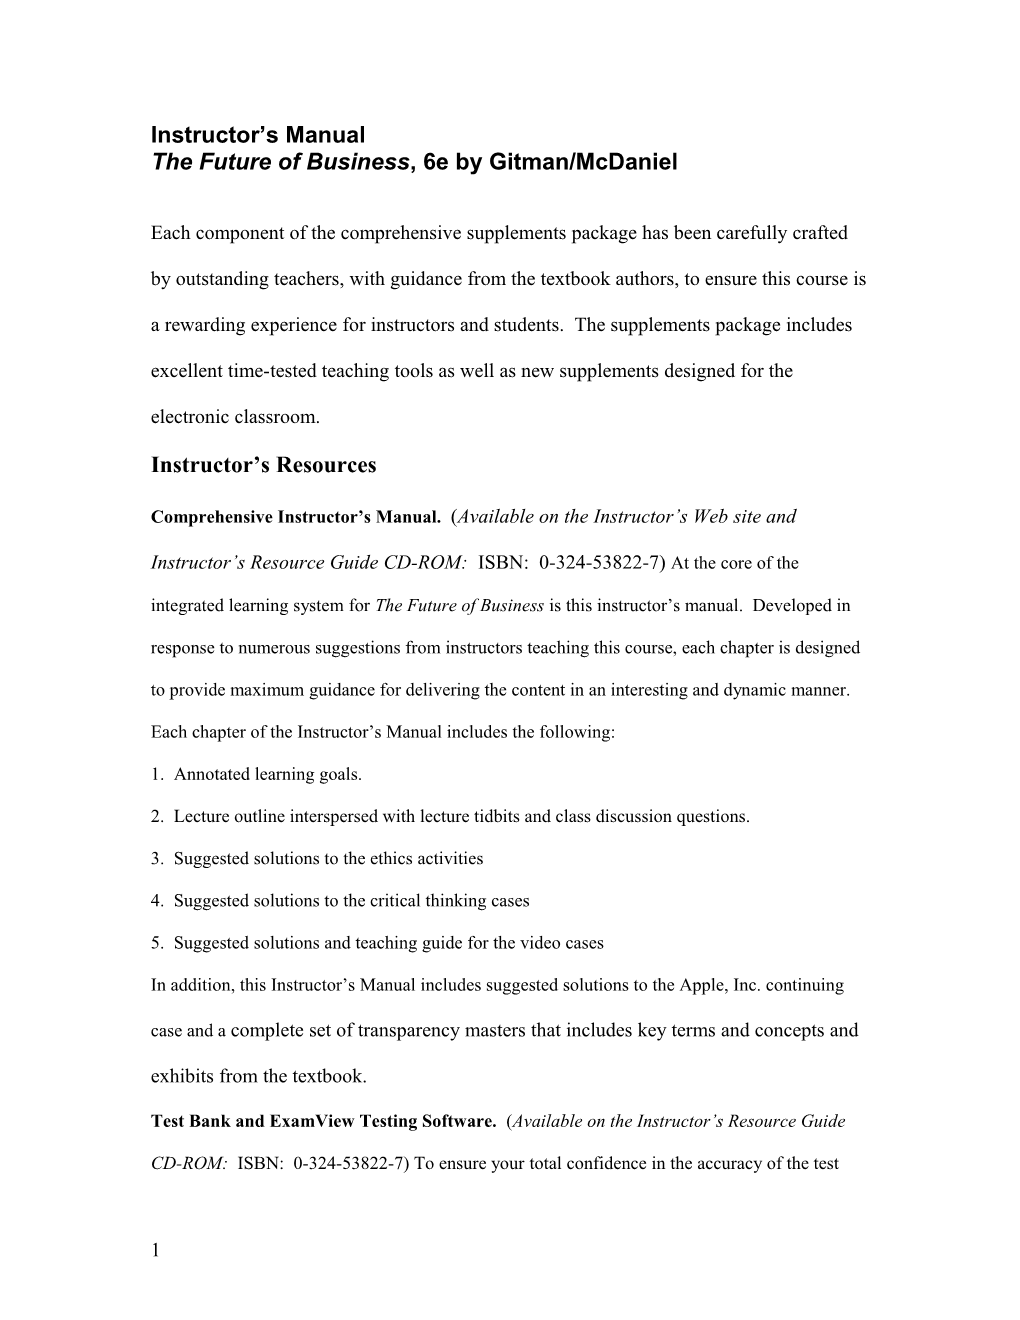 The Future of Business, 6E by Gitman/Mcdaniel